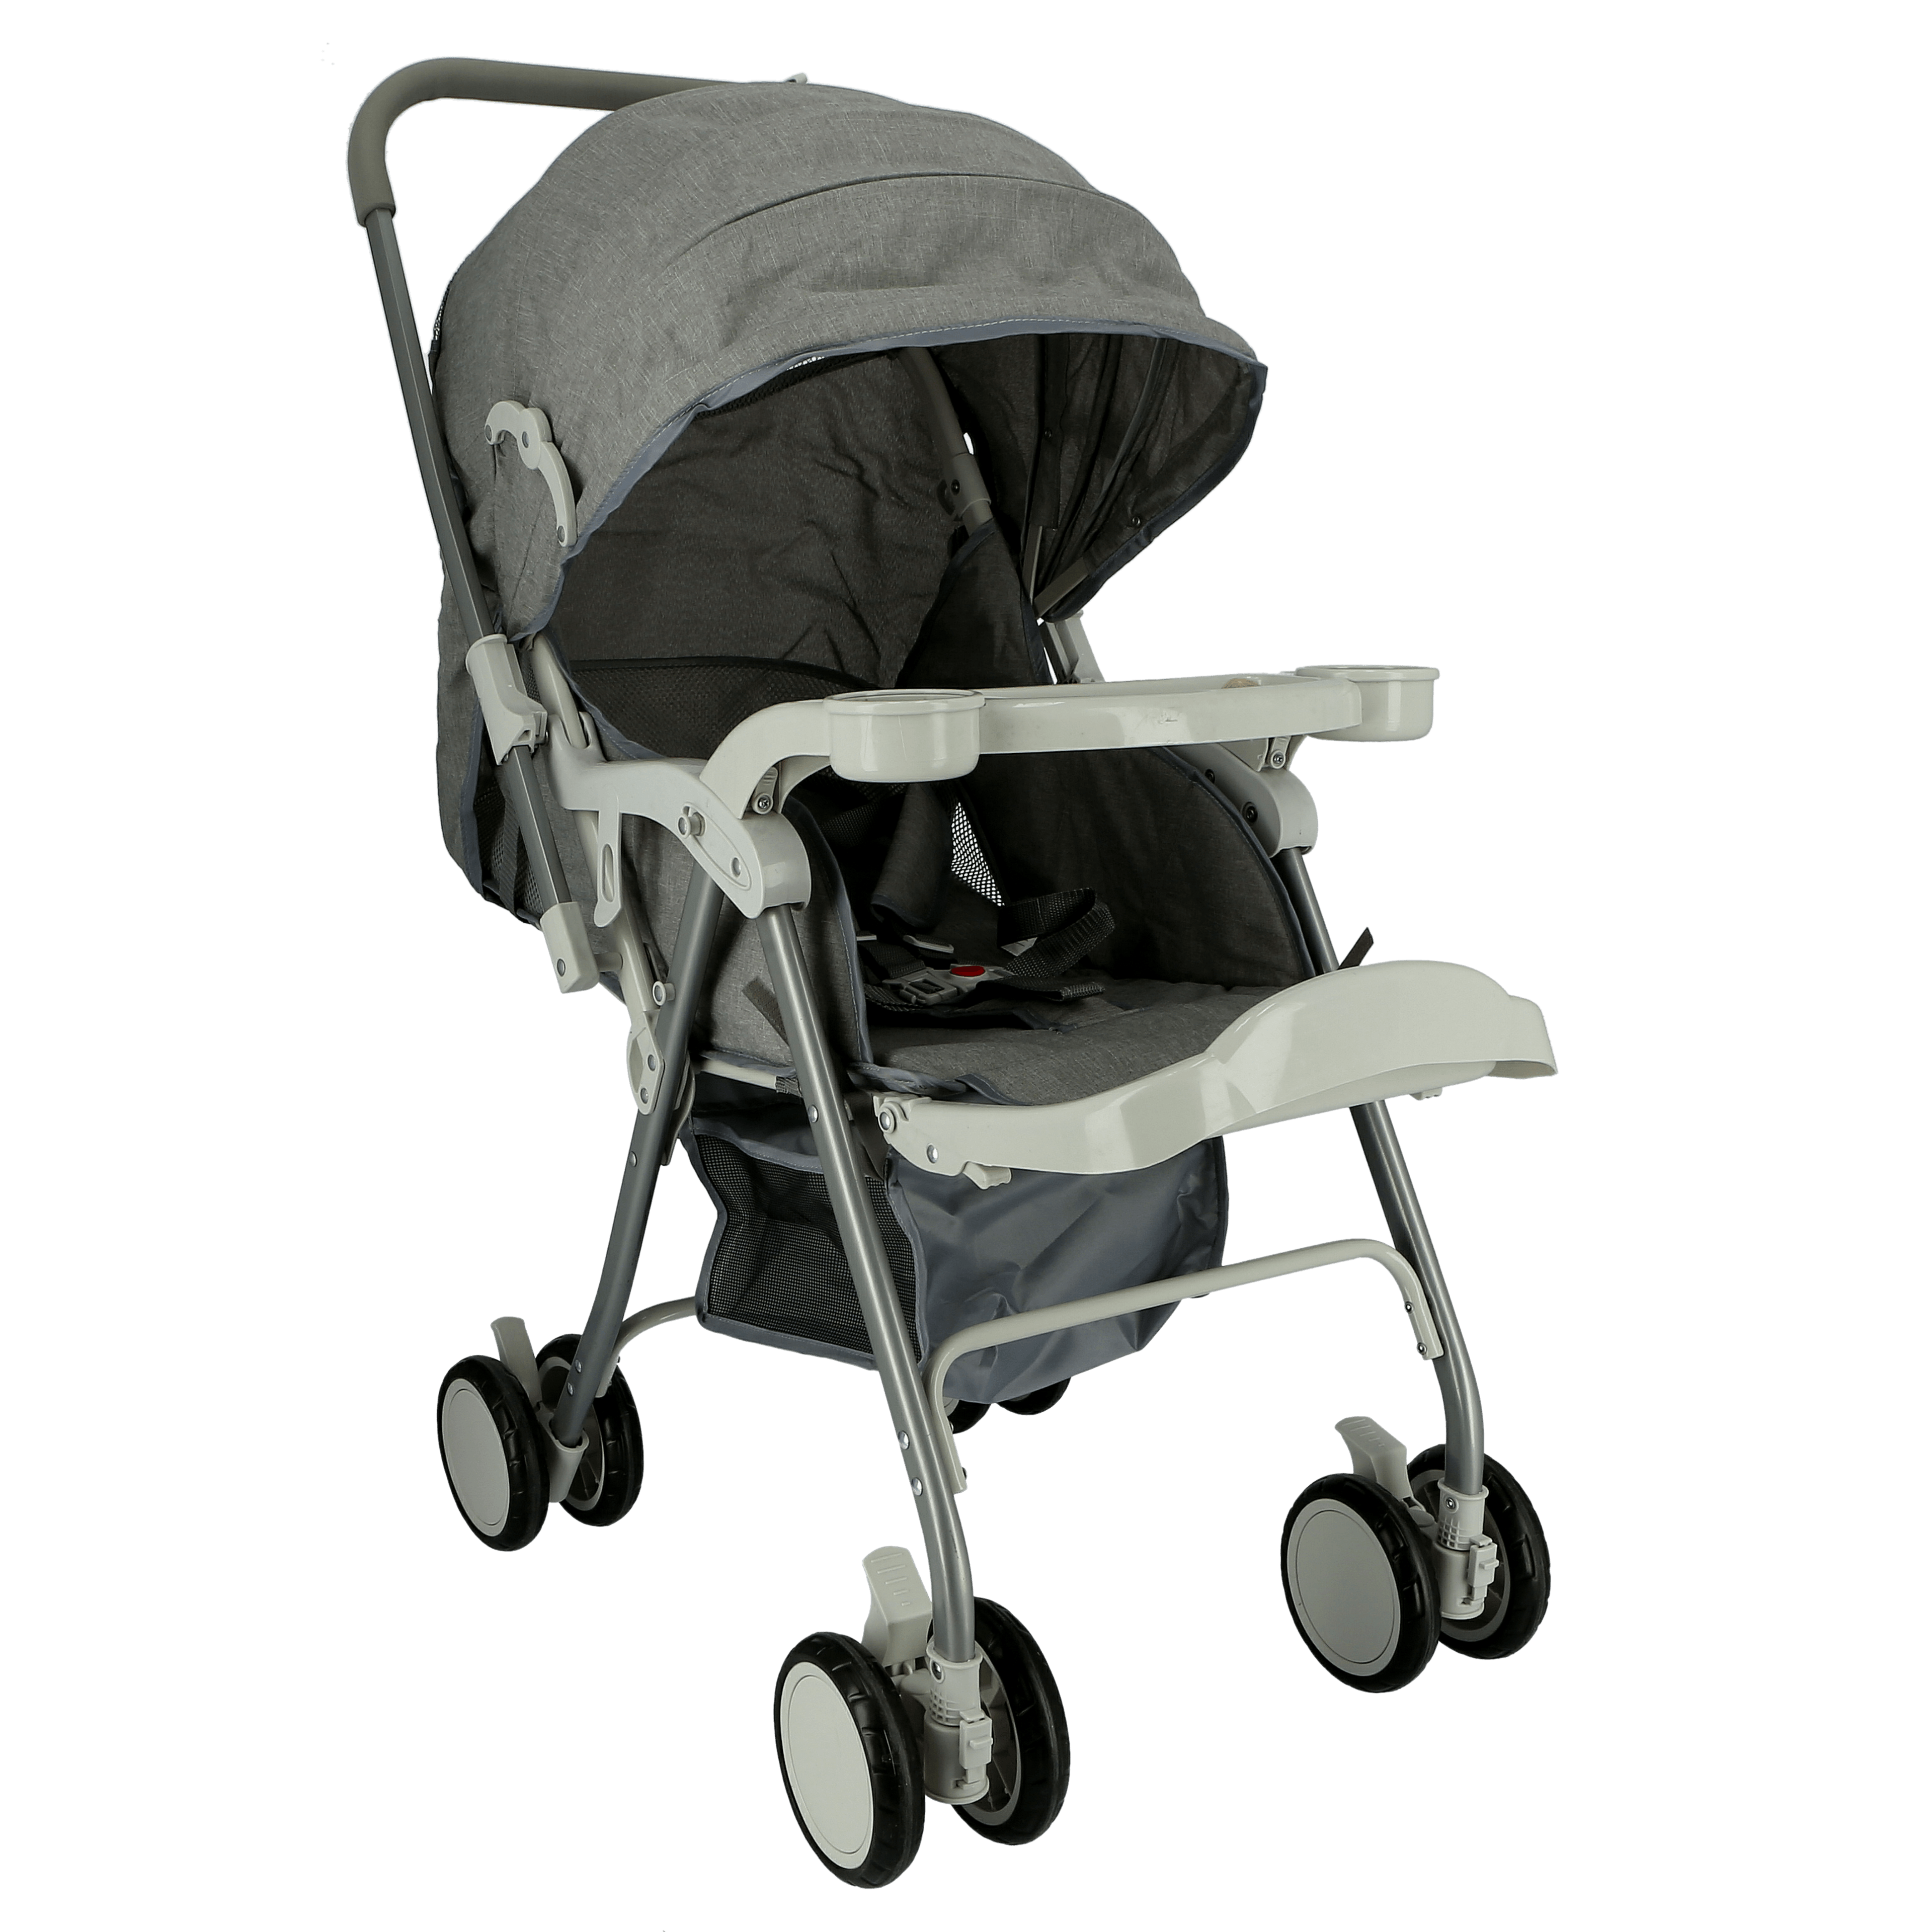 Order Baby Plus Baby Stroller - Baby Stroller, Strollers, Kids Stroller,  Best Quality Stroller, New Born Now!